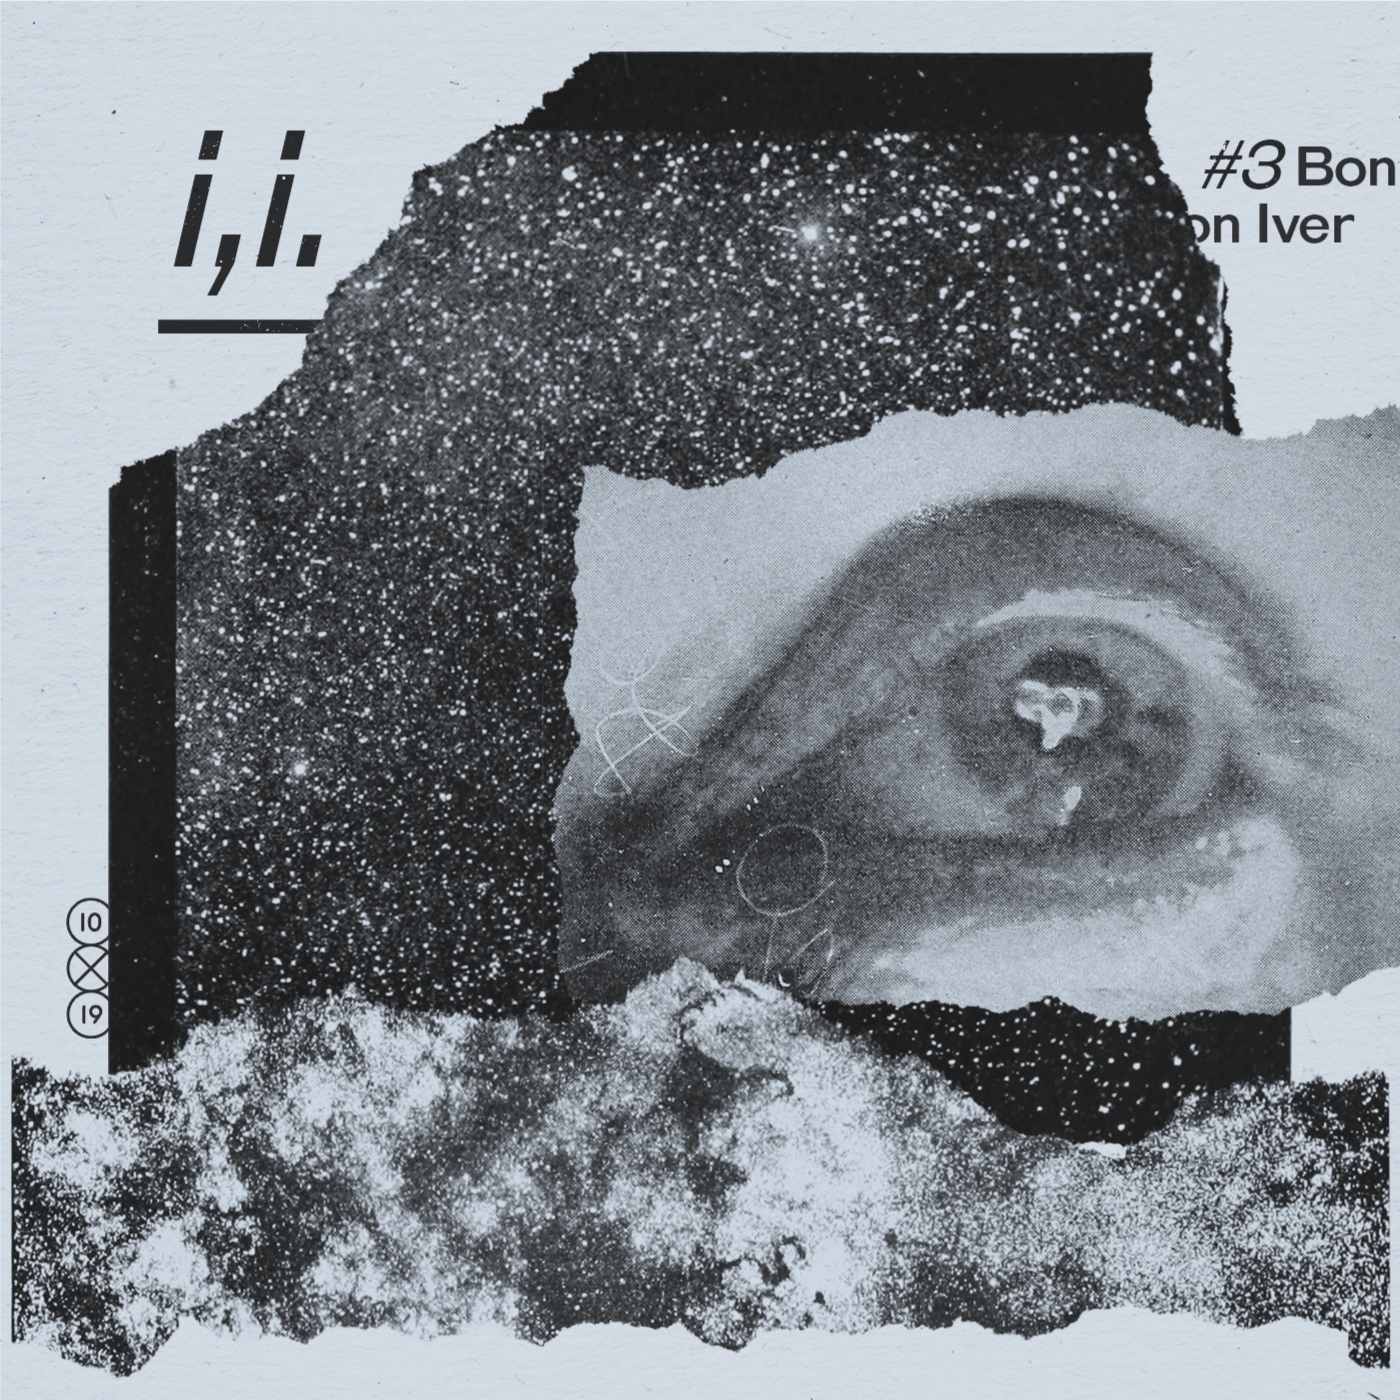 BonIver album cover by Jen Hood for 10x19